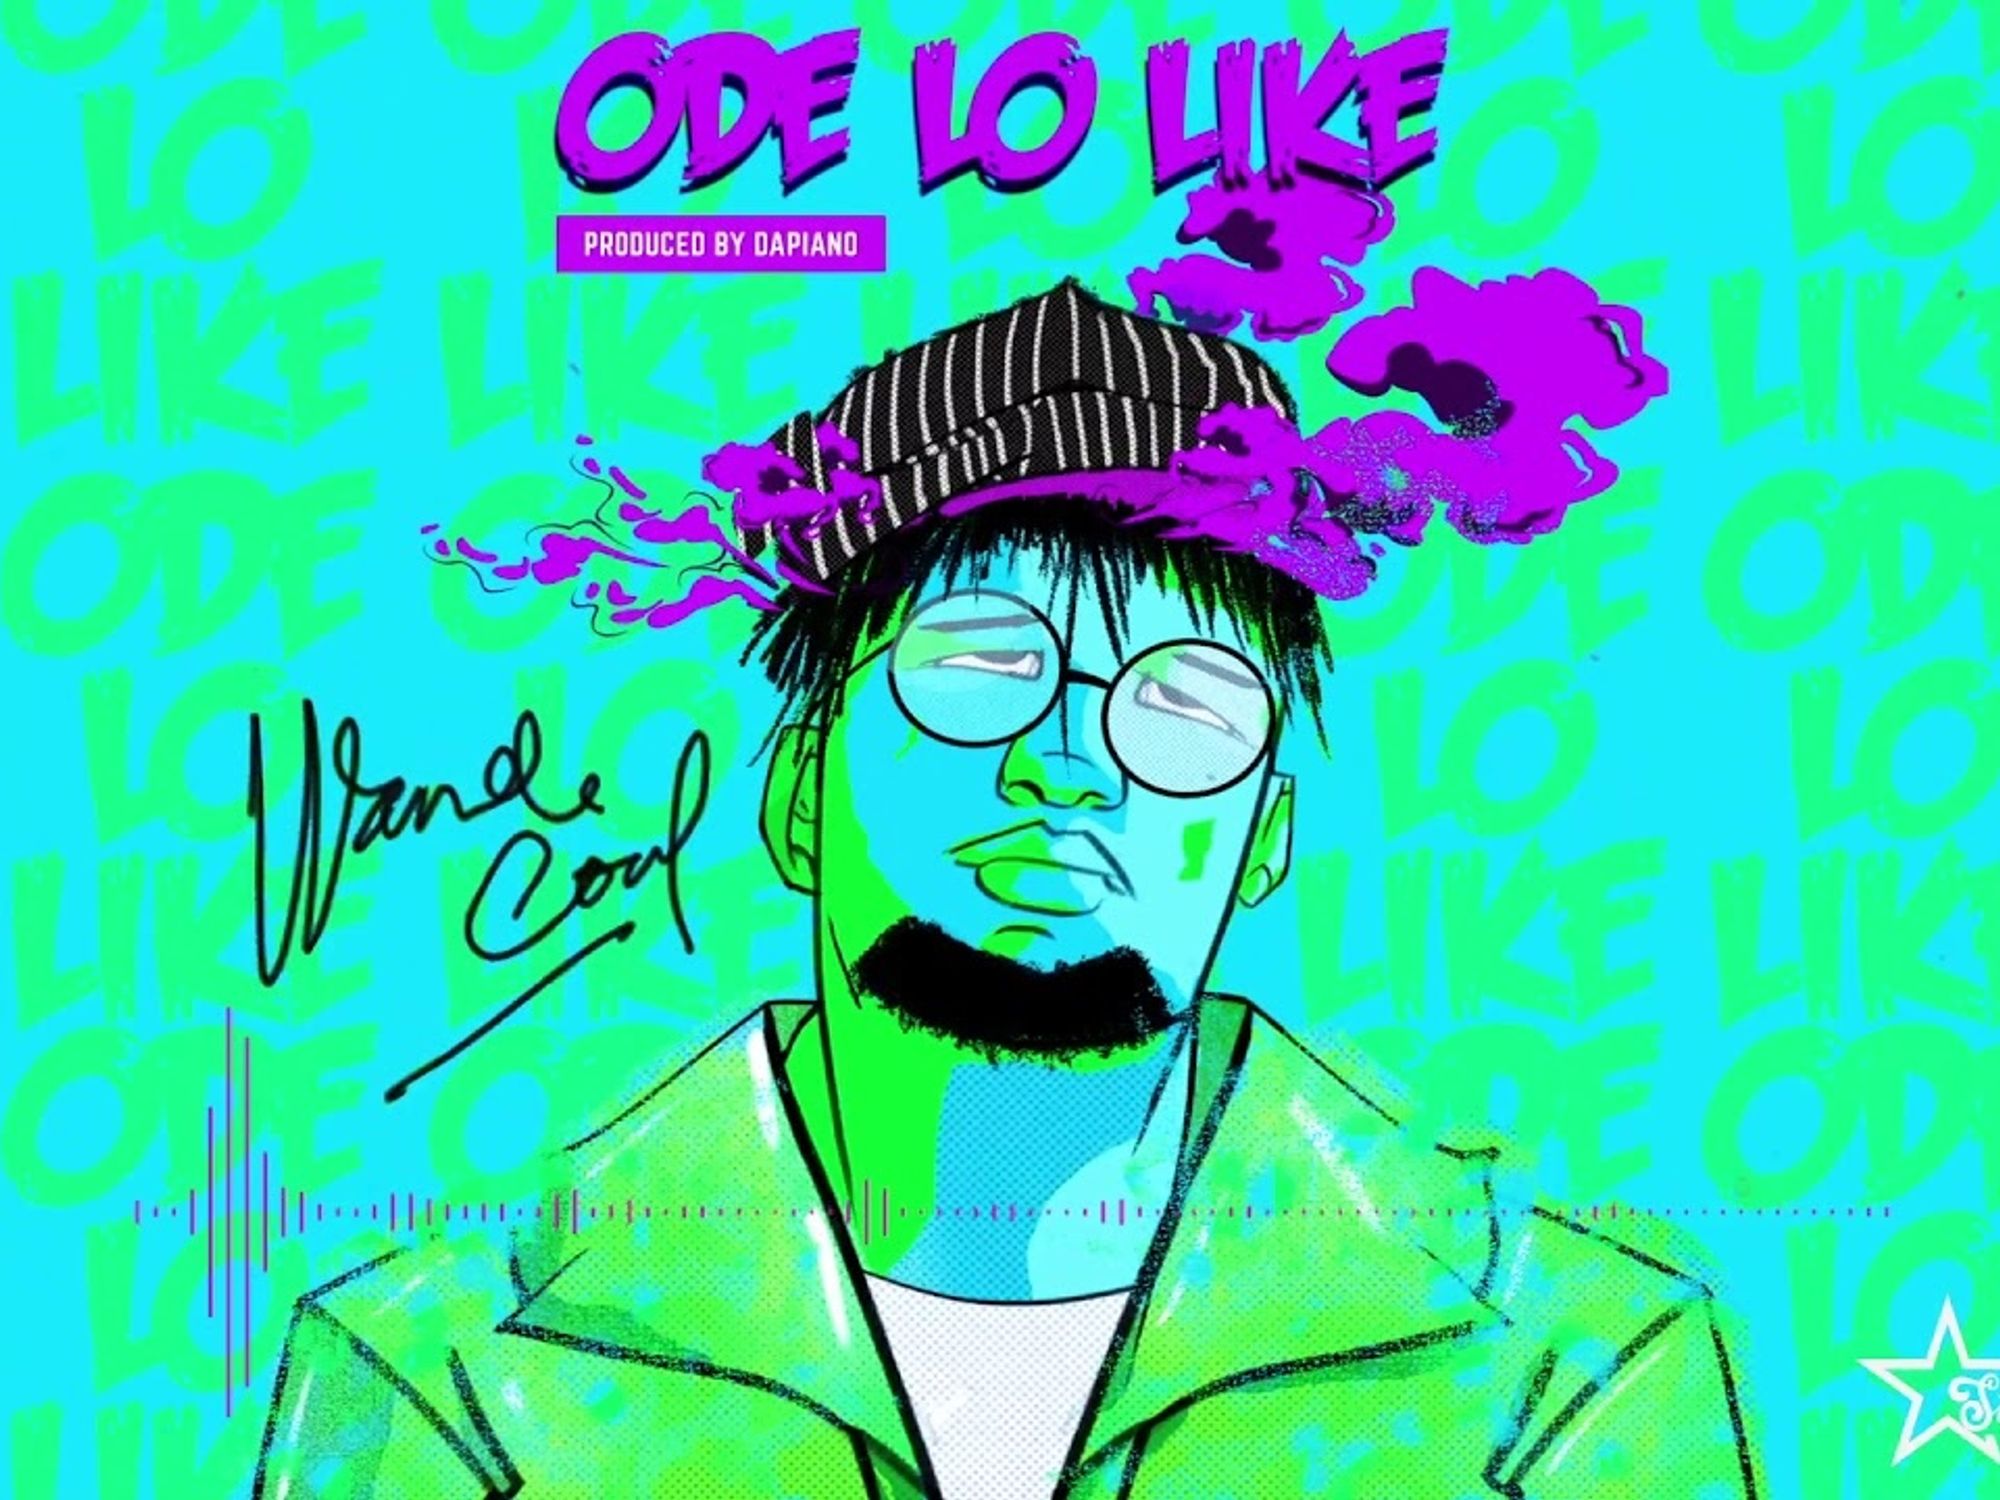 Wande Coal Drops Catchy New Single 'Ode Lo Like'